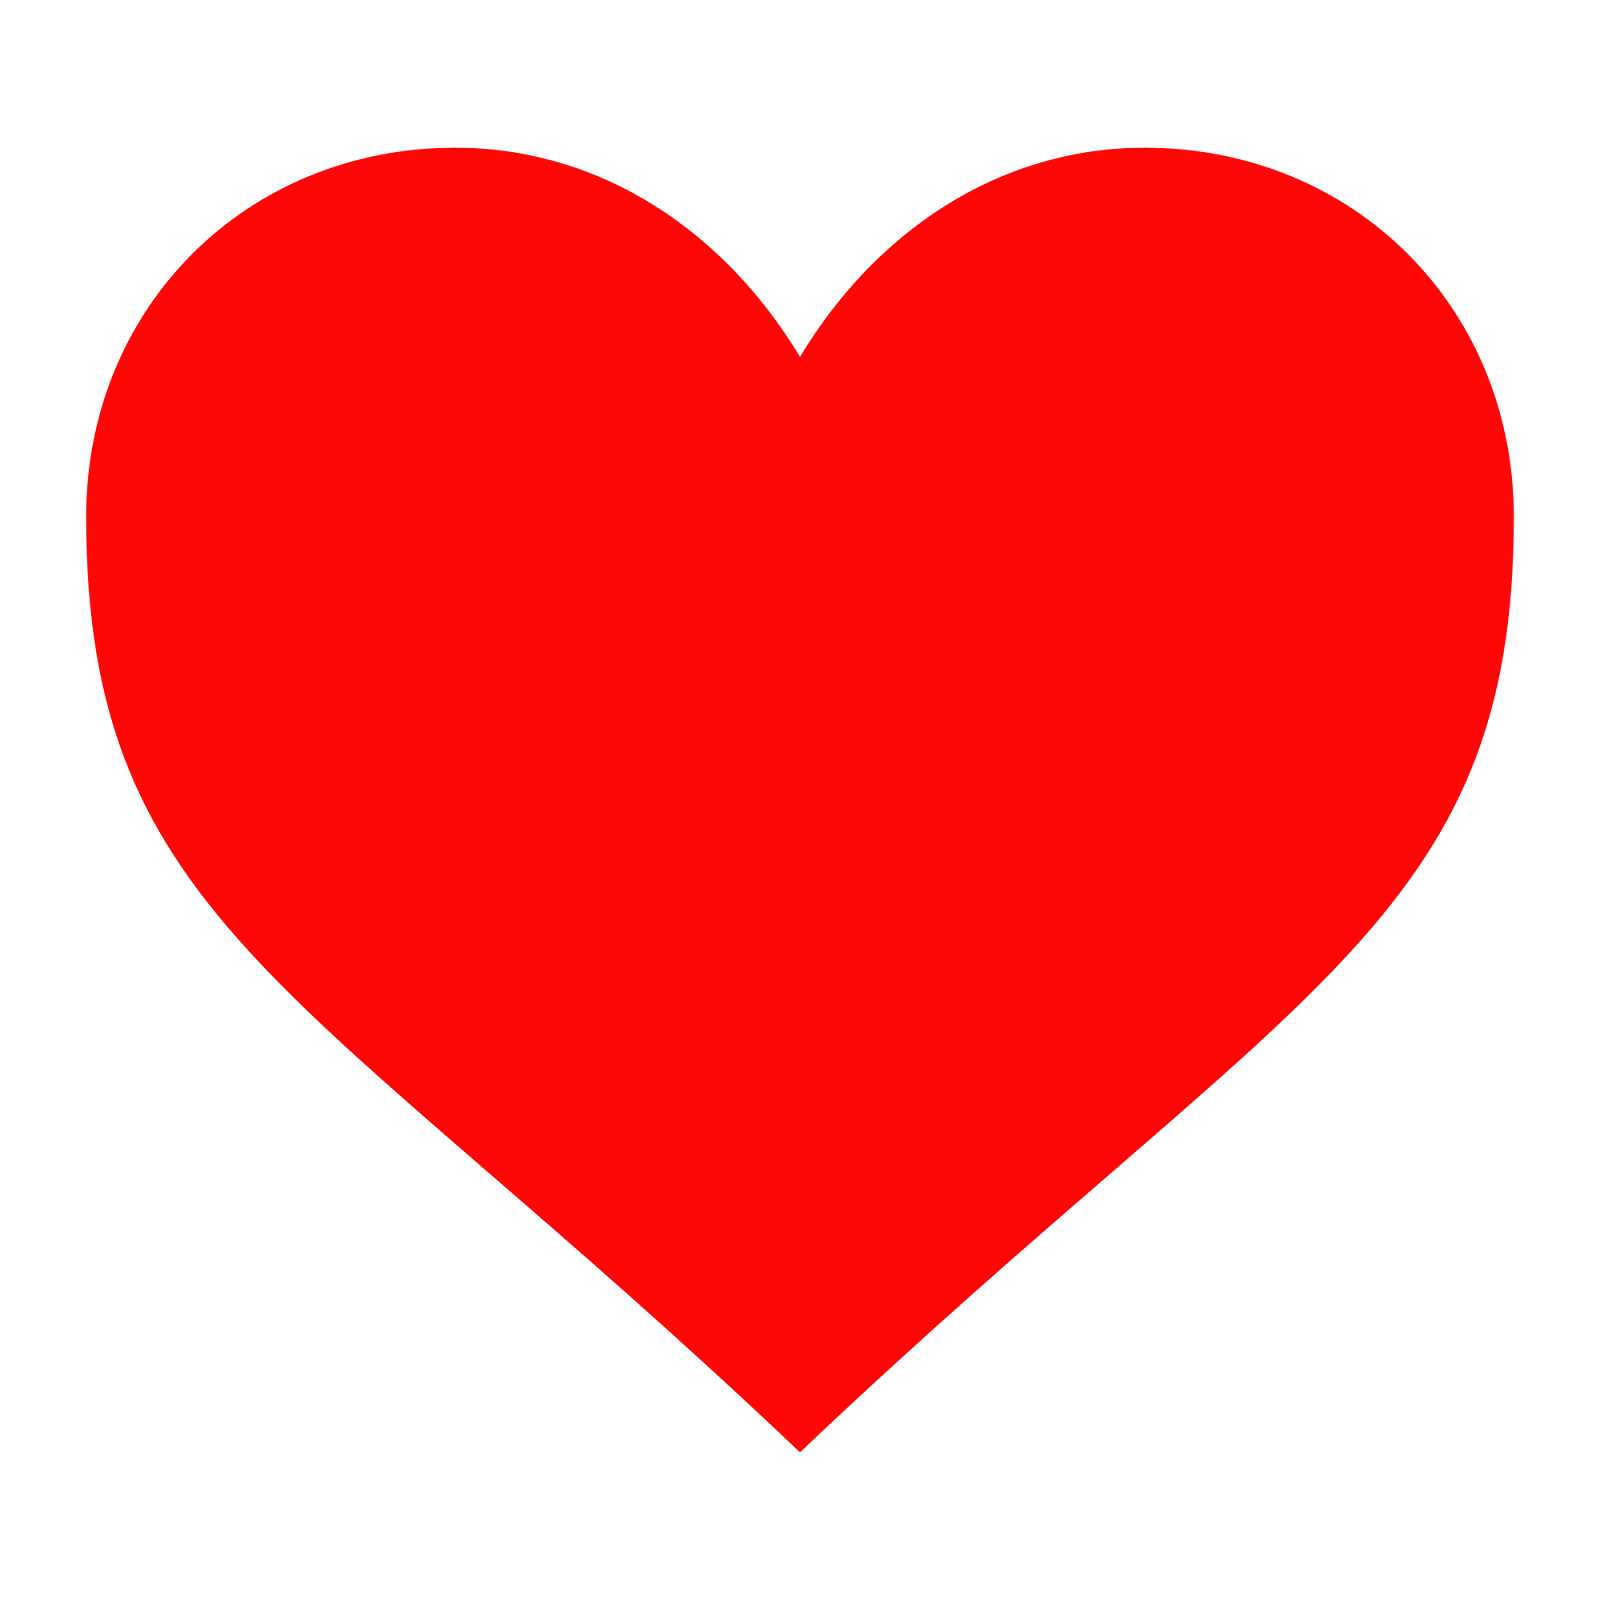 File:Heart corazón.svg - Wikimedia Commons